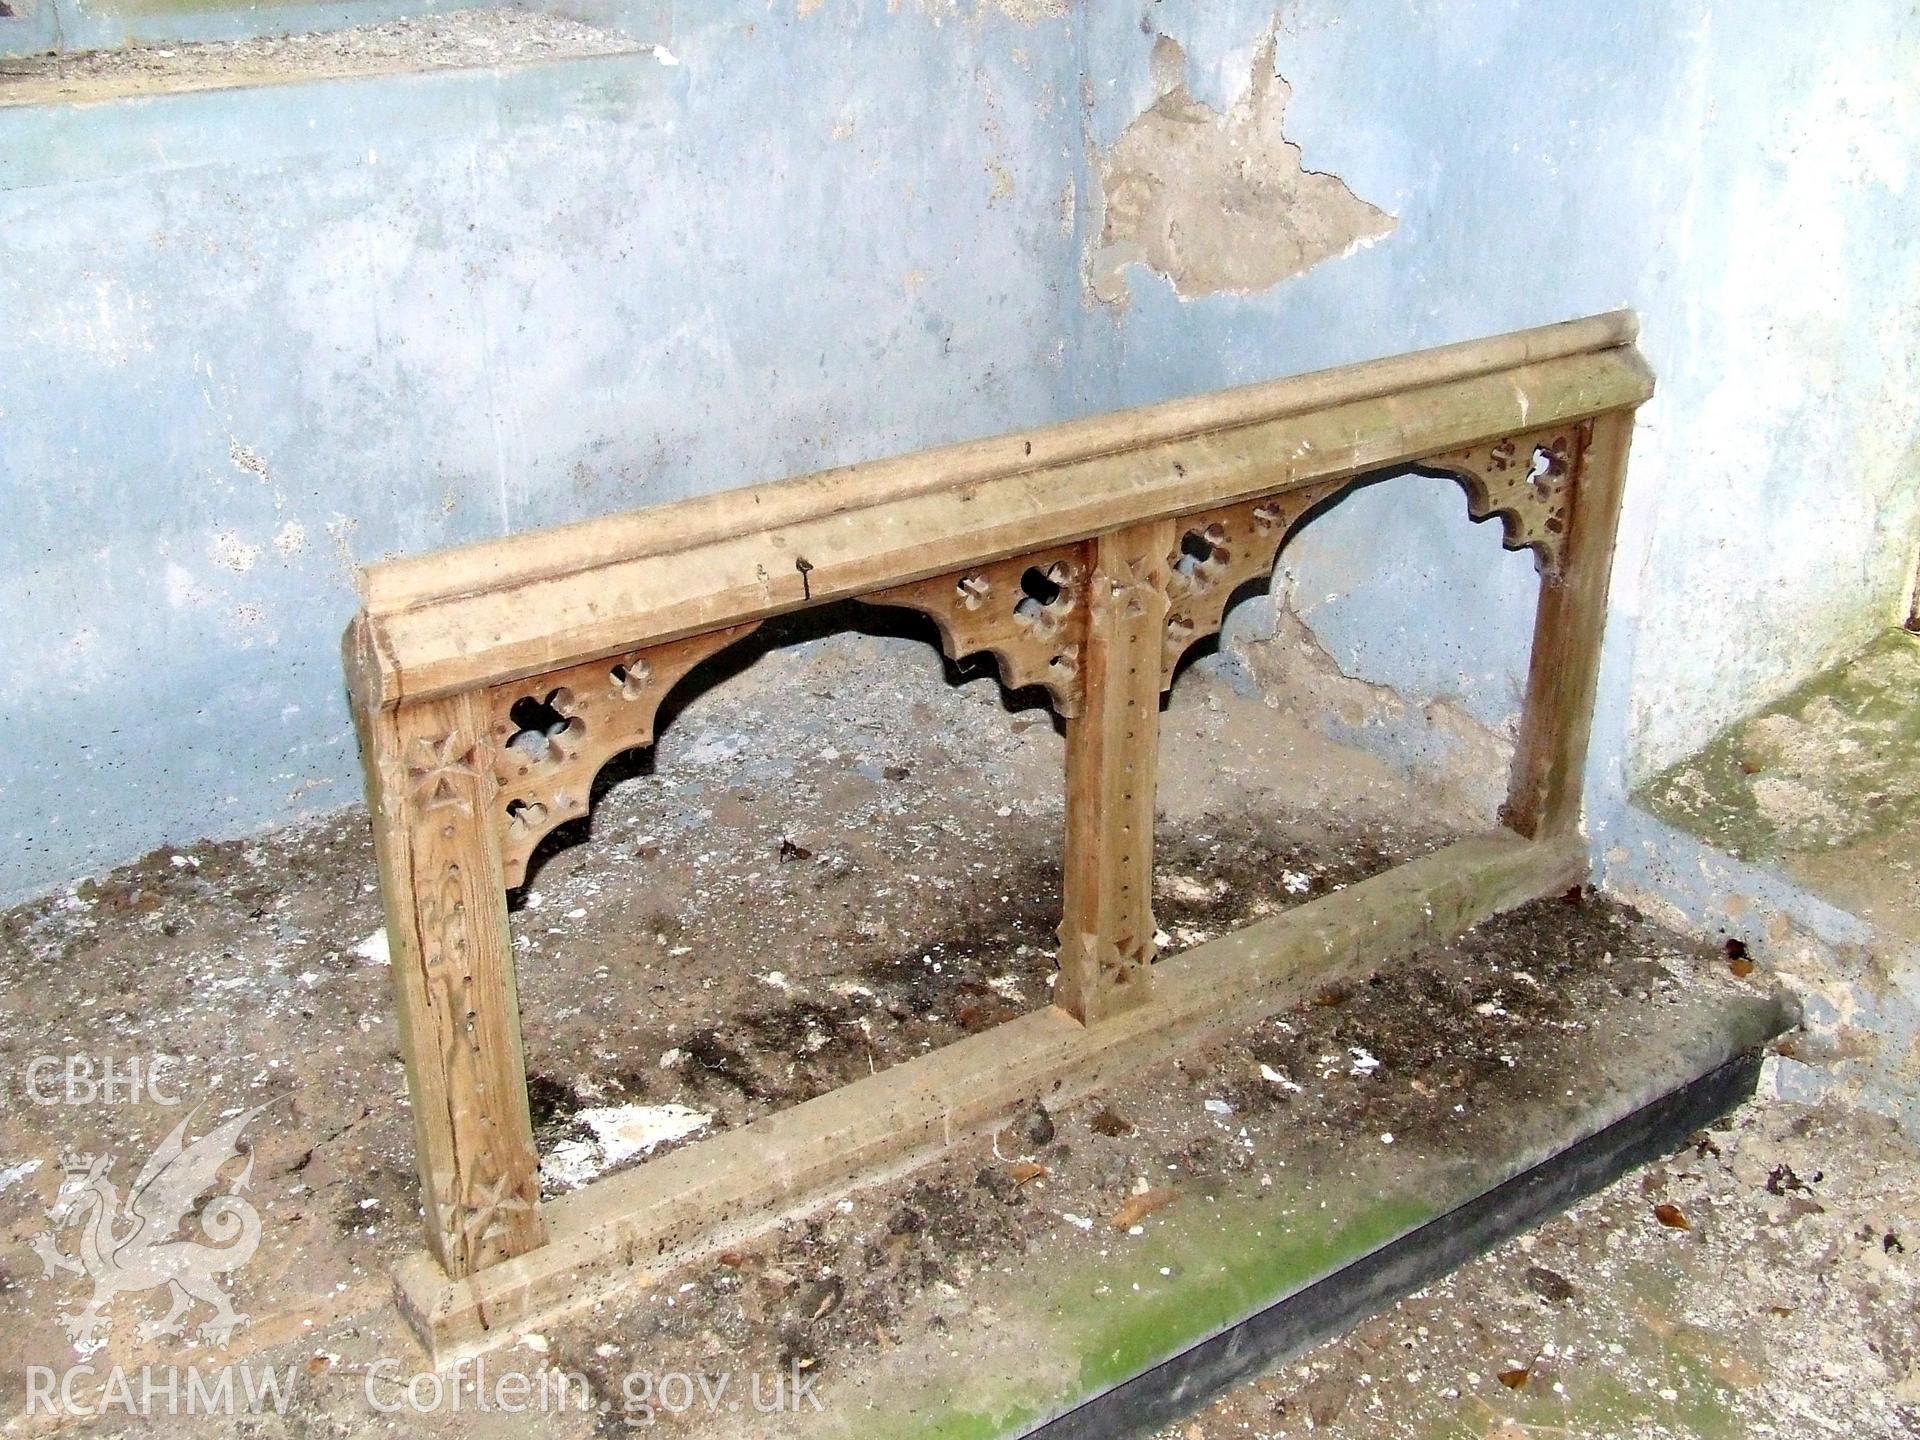 Digital colour photograph showing altar balustrade at Castell Dwyran church.